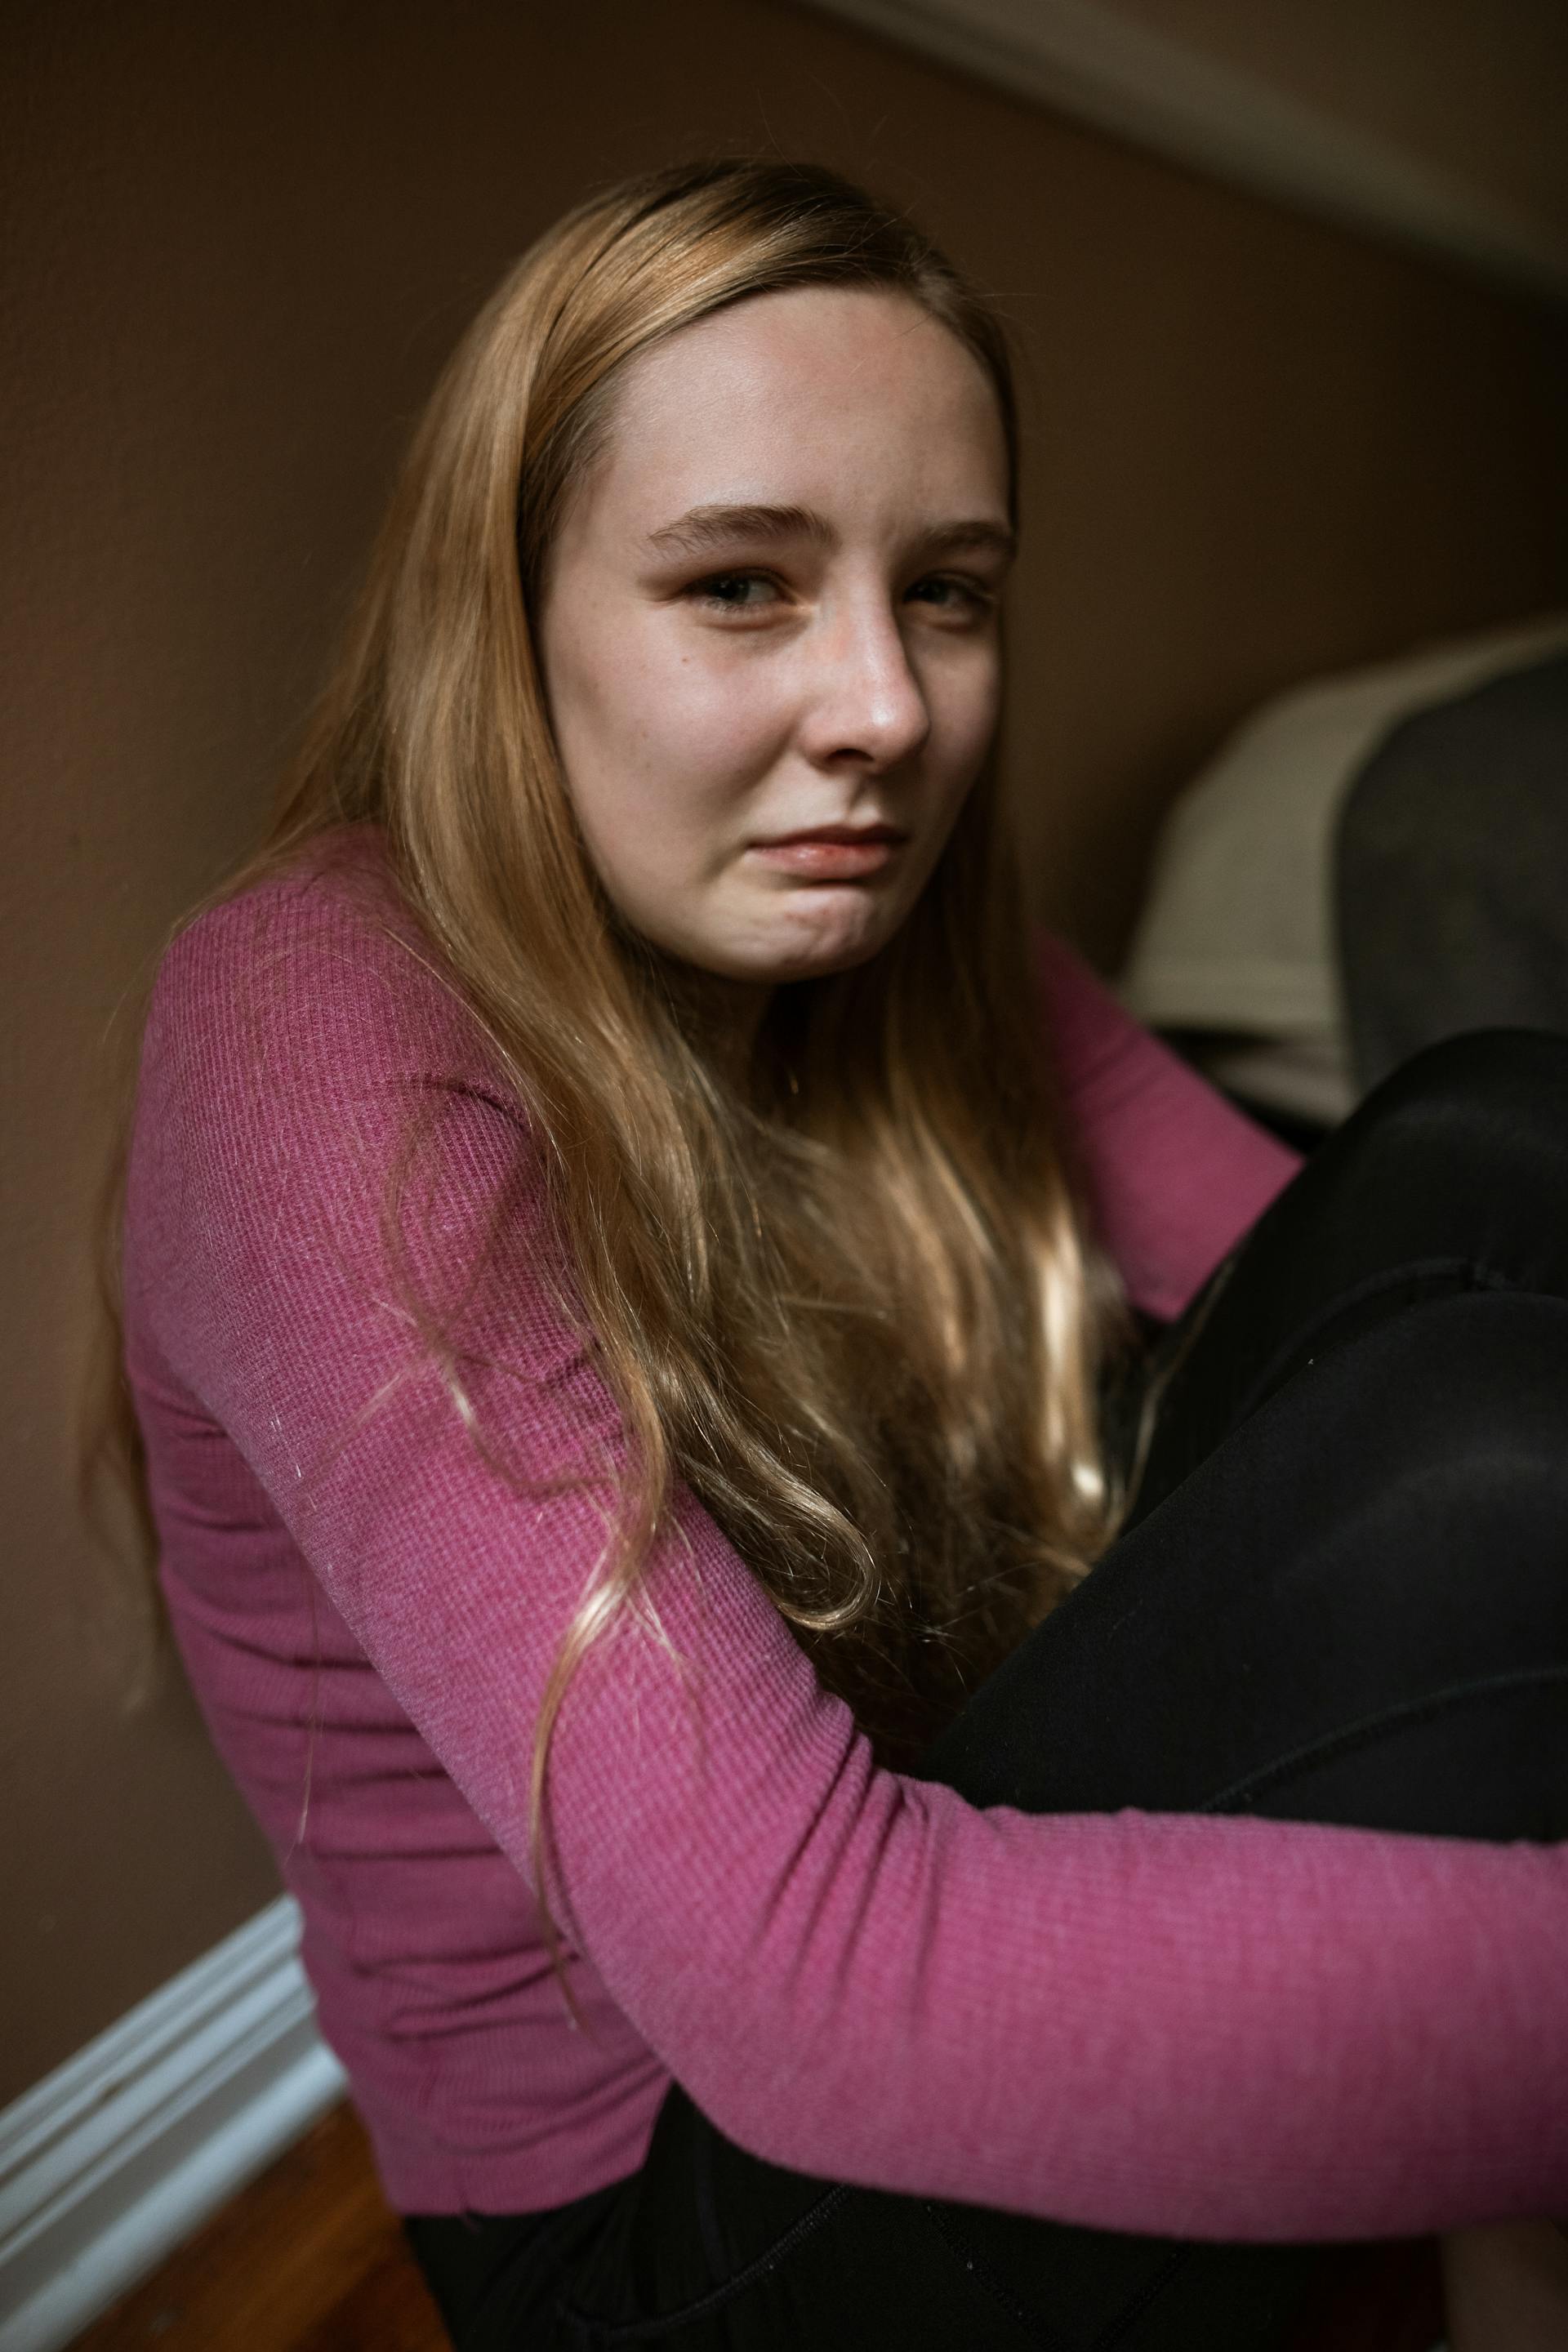 Tearful teen girl | Source: Pexels